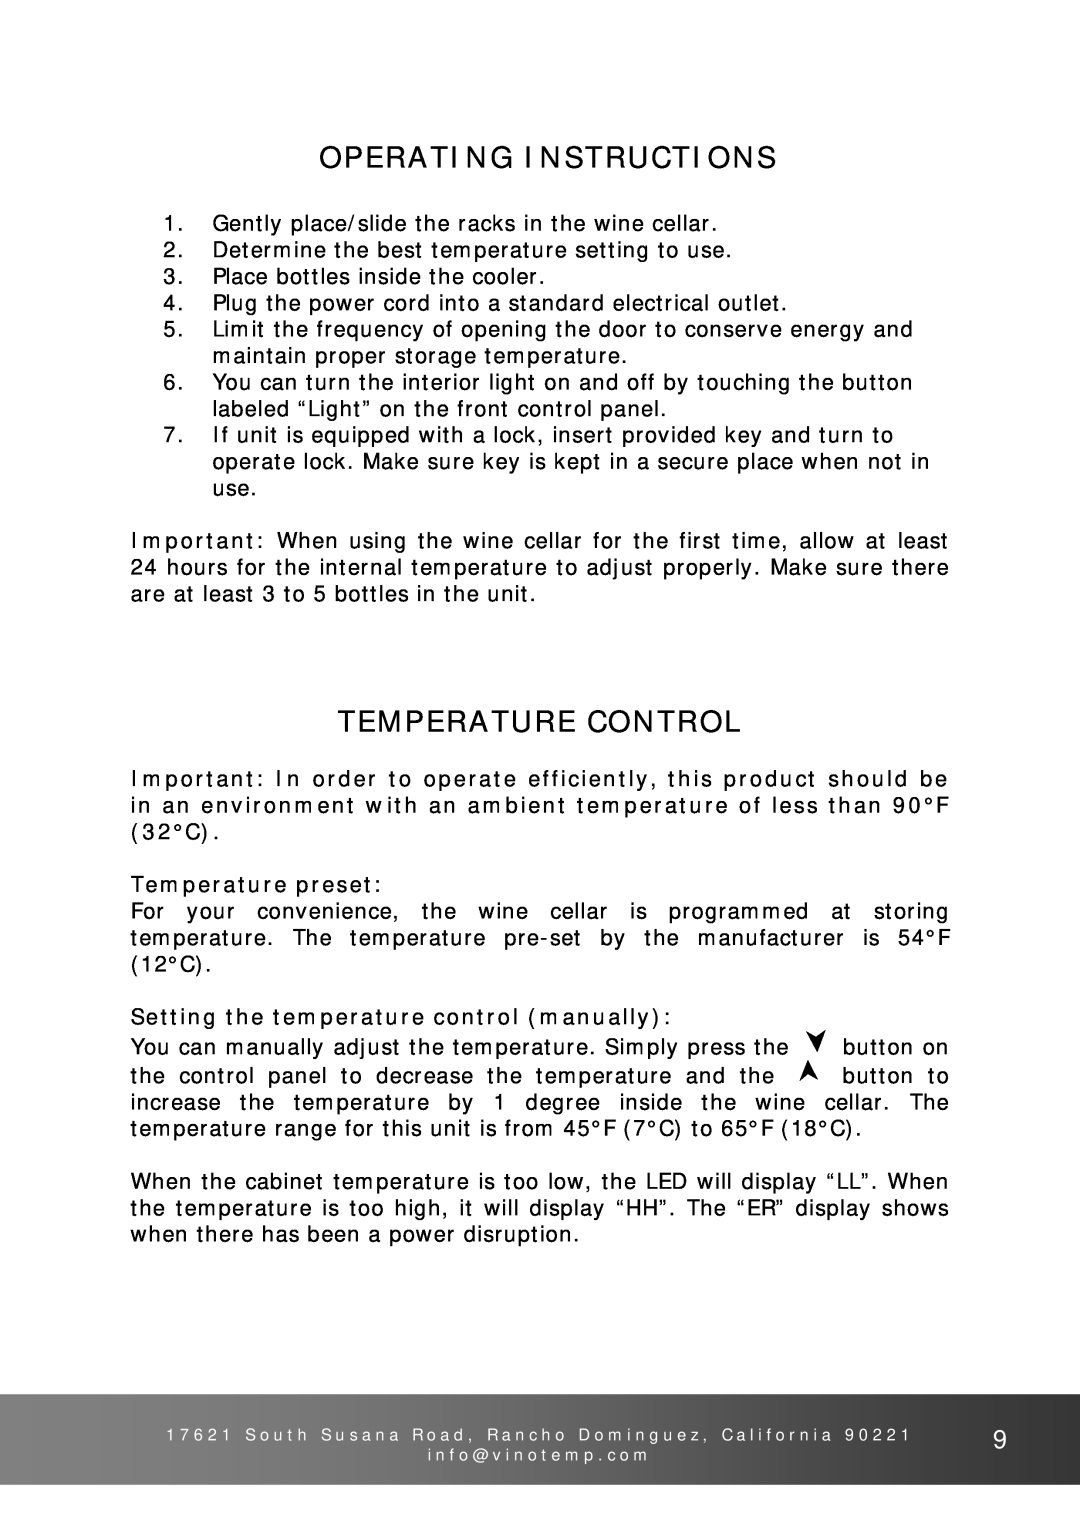 Vinotemp VT-26 Operating Instructions, Temperature Control, Temperature preset, Setting the temperature control manually 